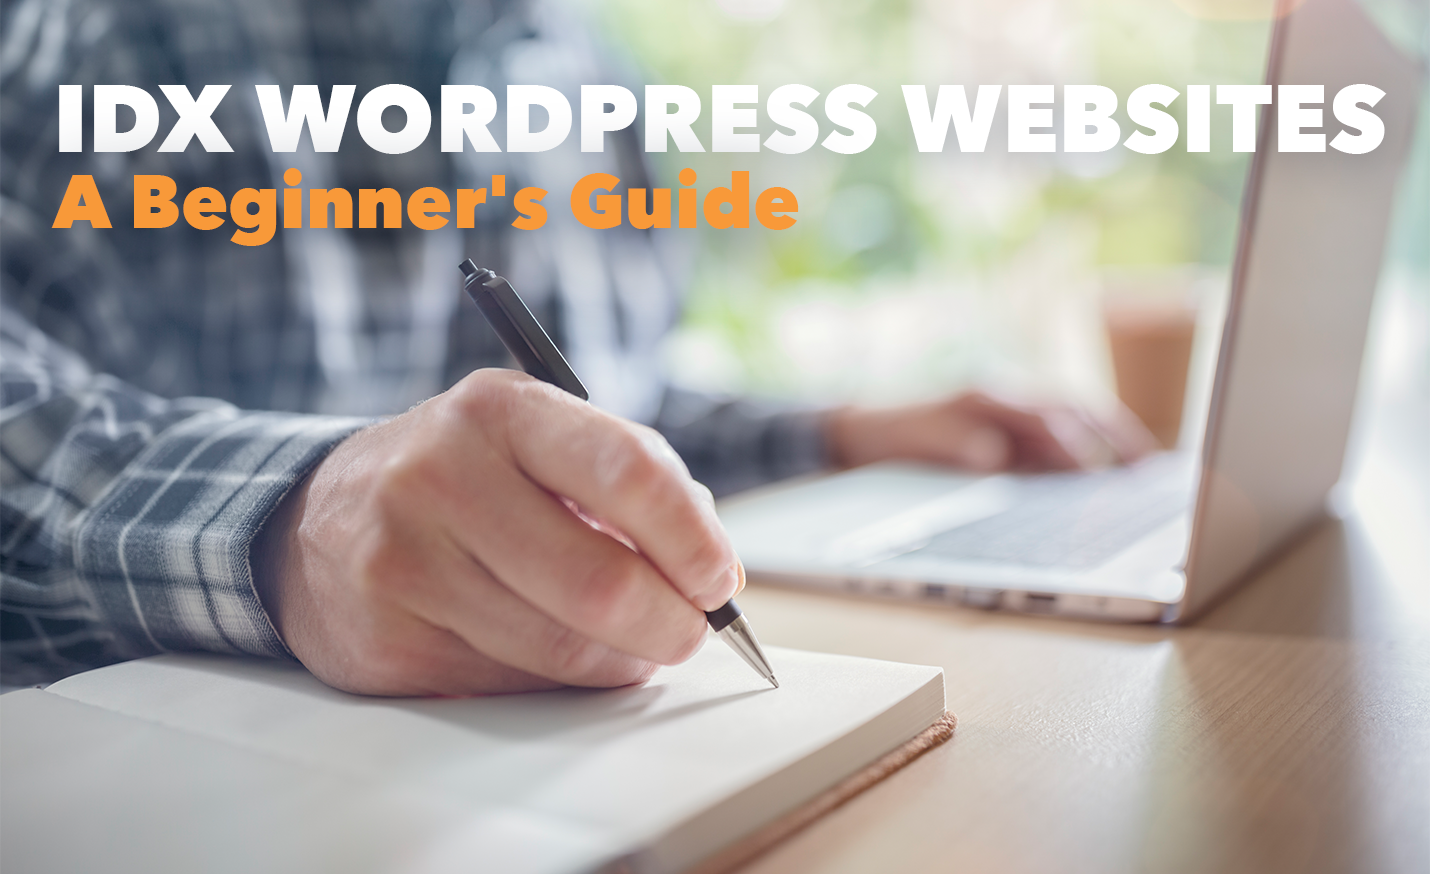 IDX WordPress Websites A Beginners Guide Free Download